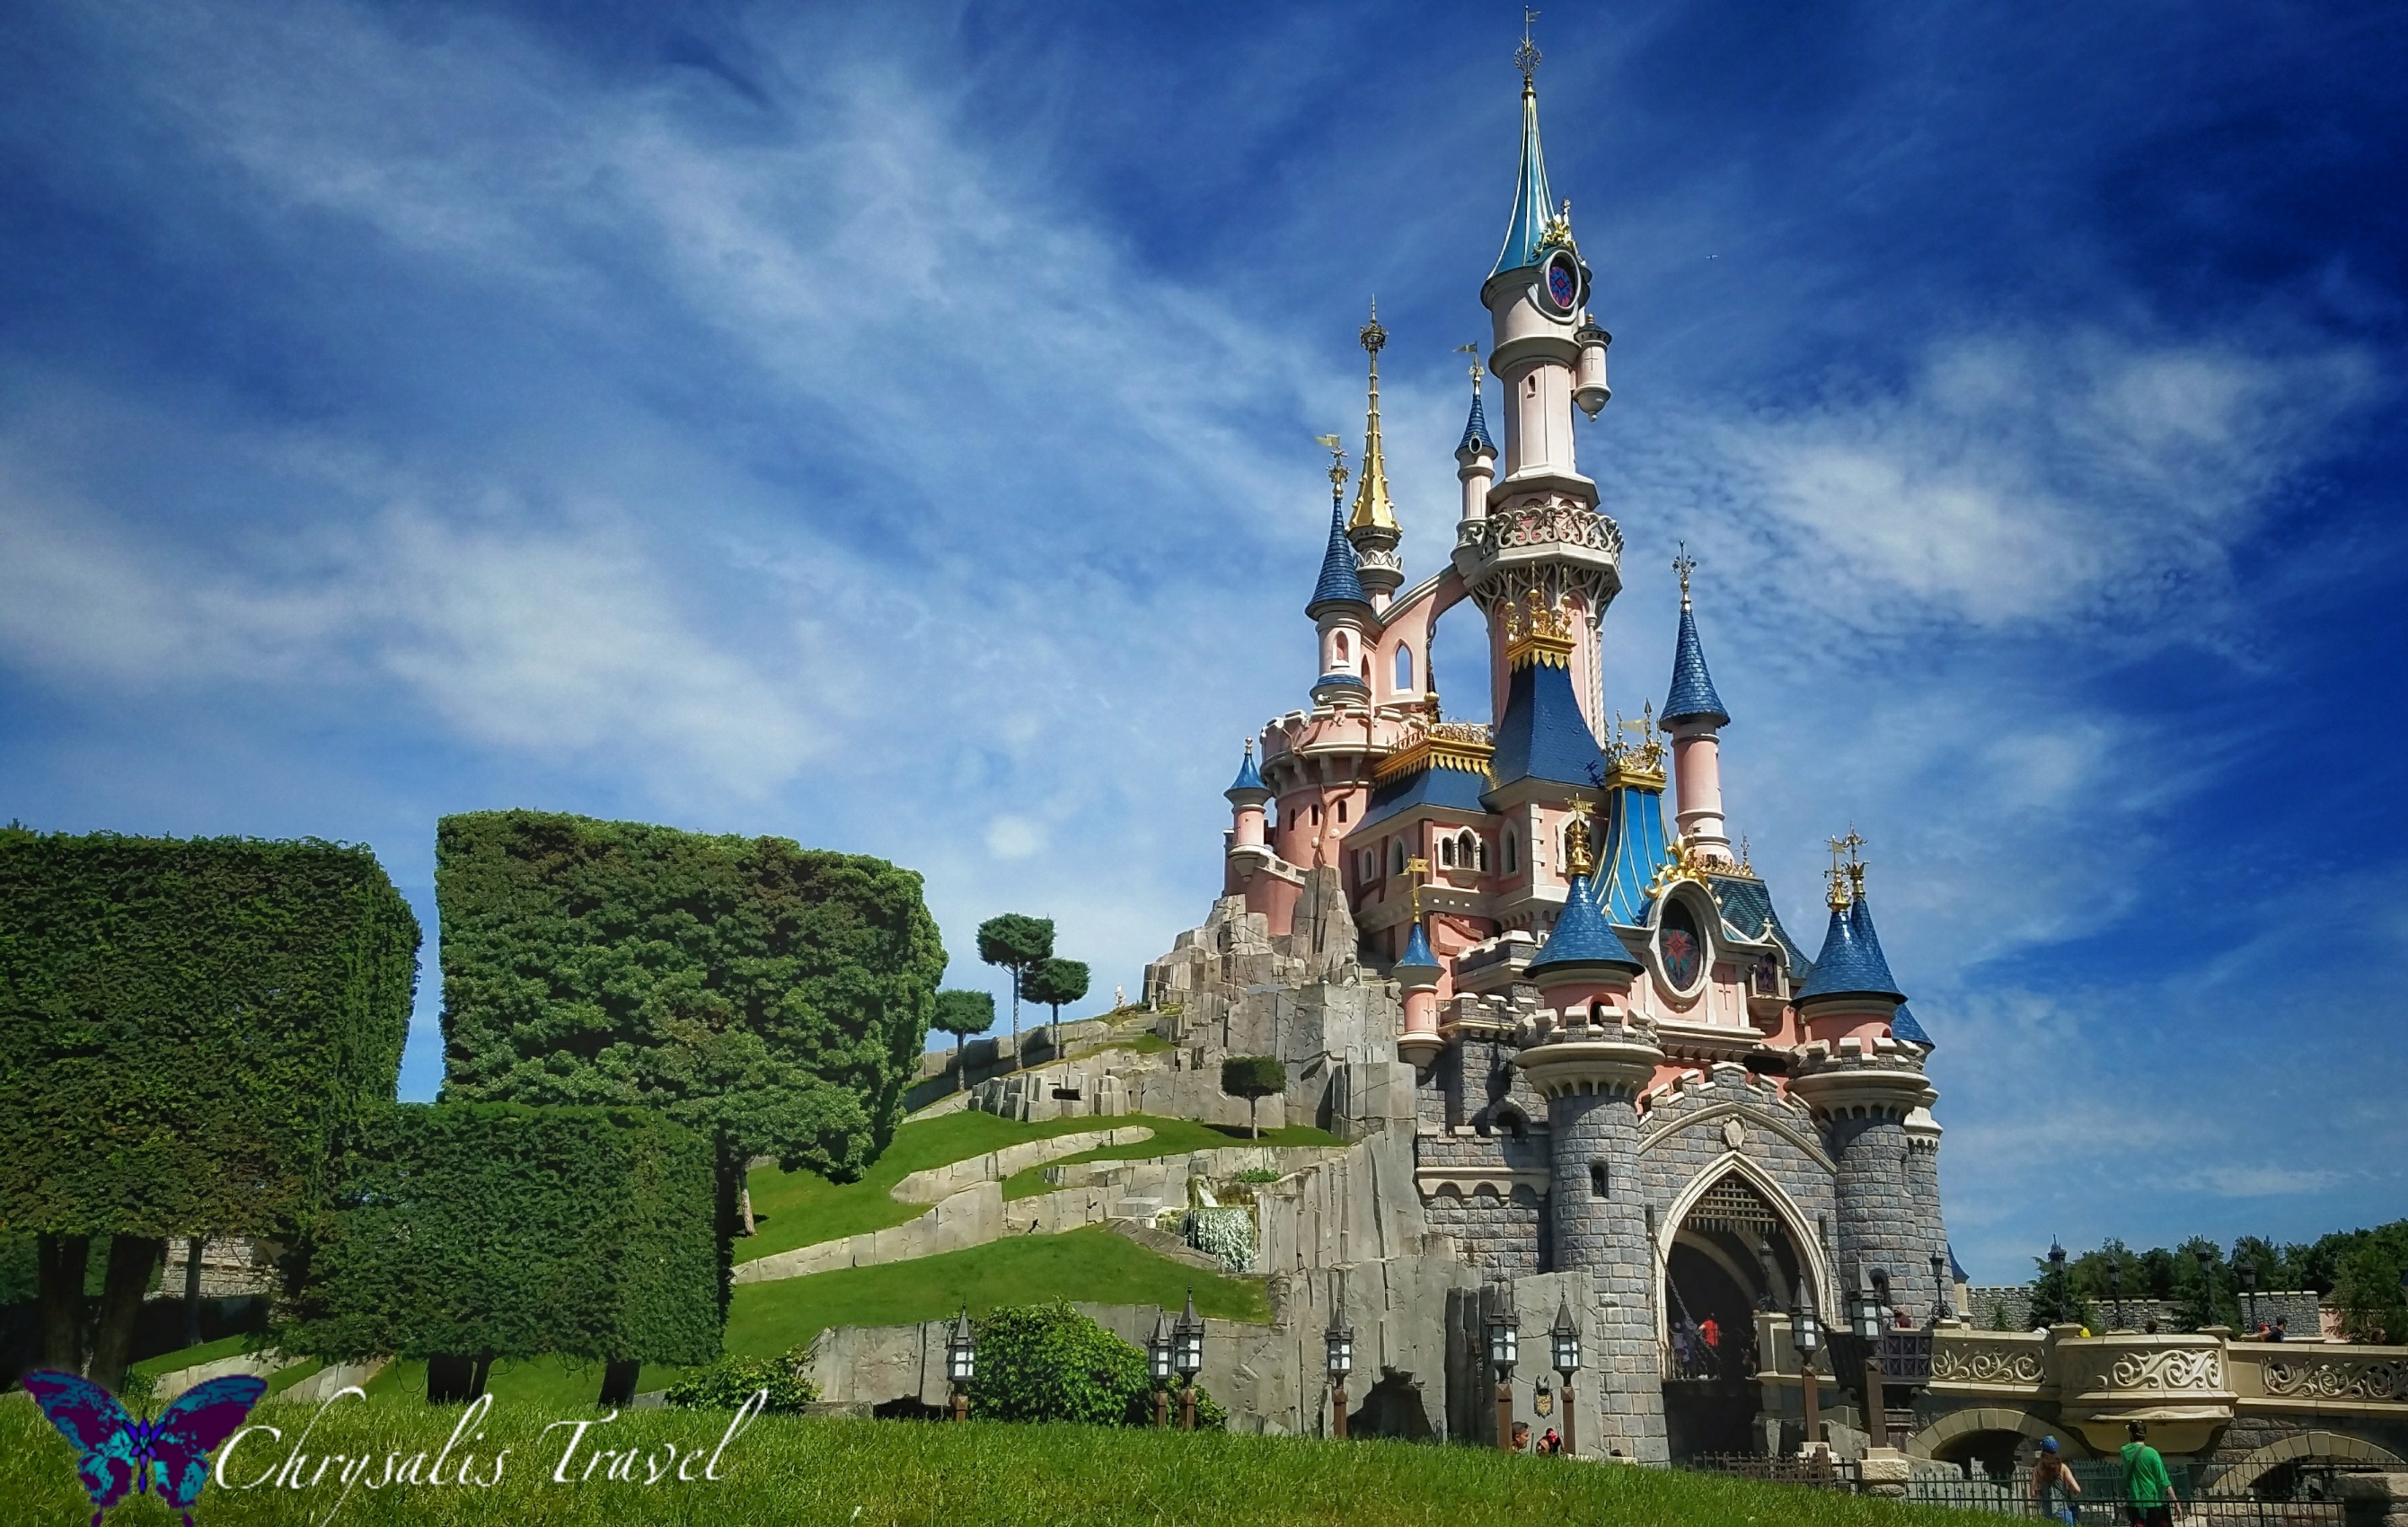 Sleeping Beauty Castle in Disneyland Paris DLP  Disneyland paris,  Disneyland, Disneyland paris castle